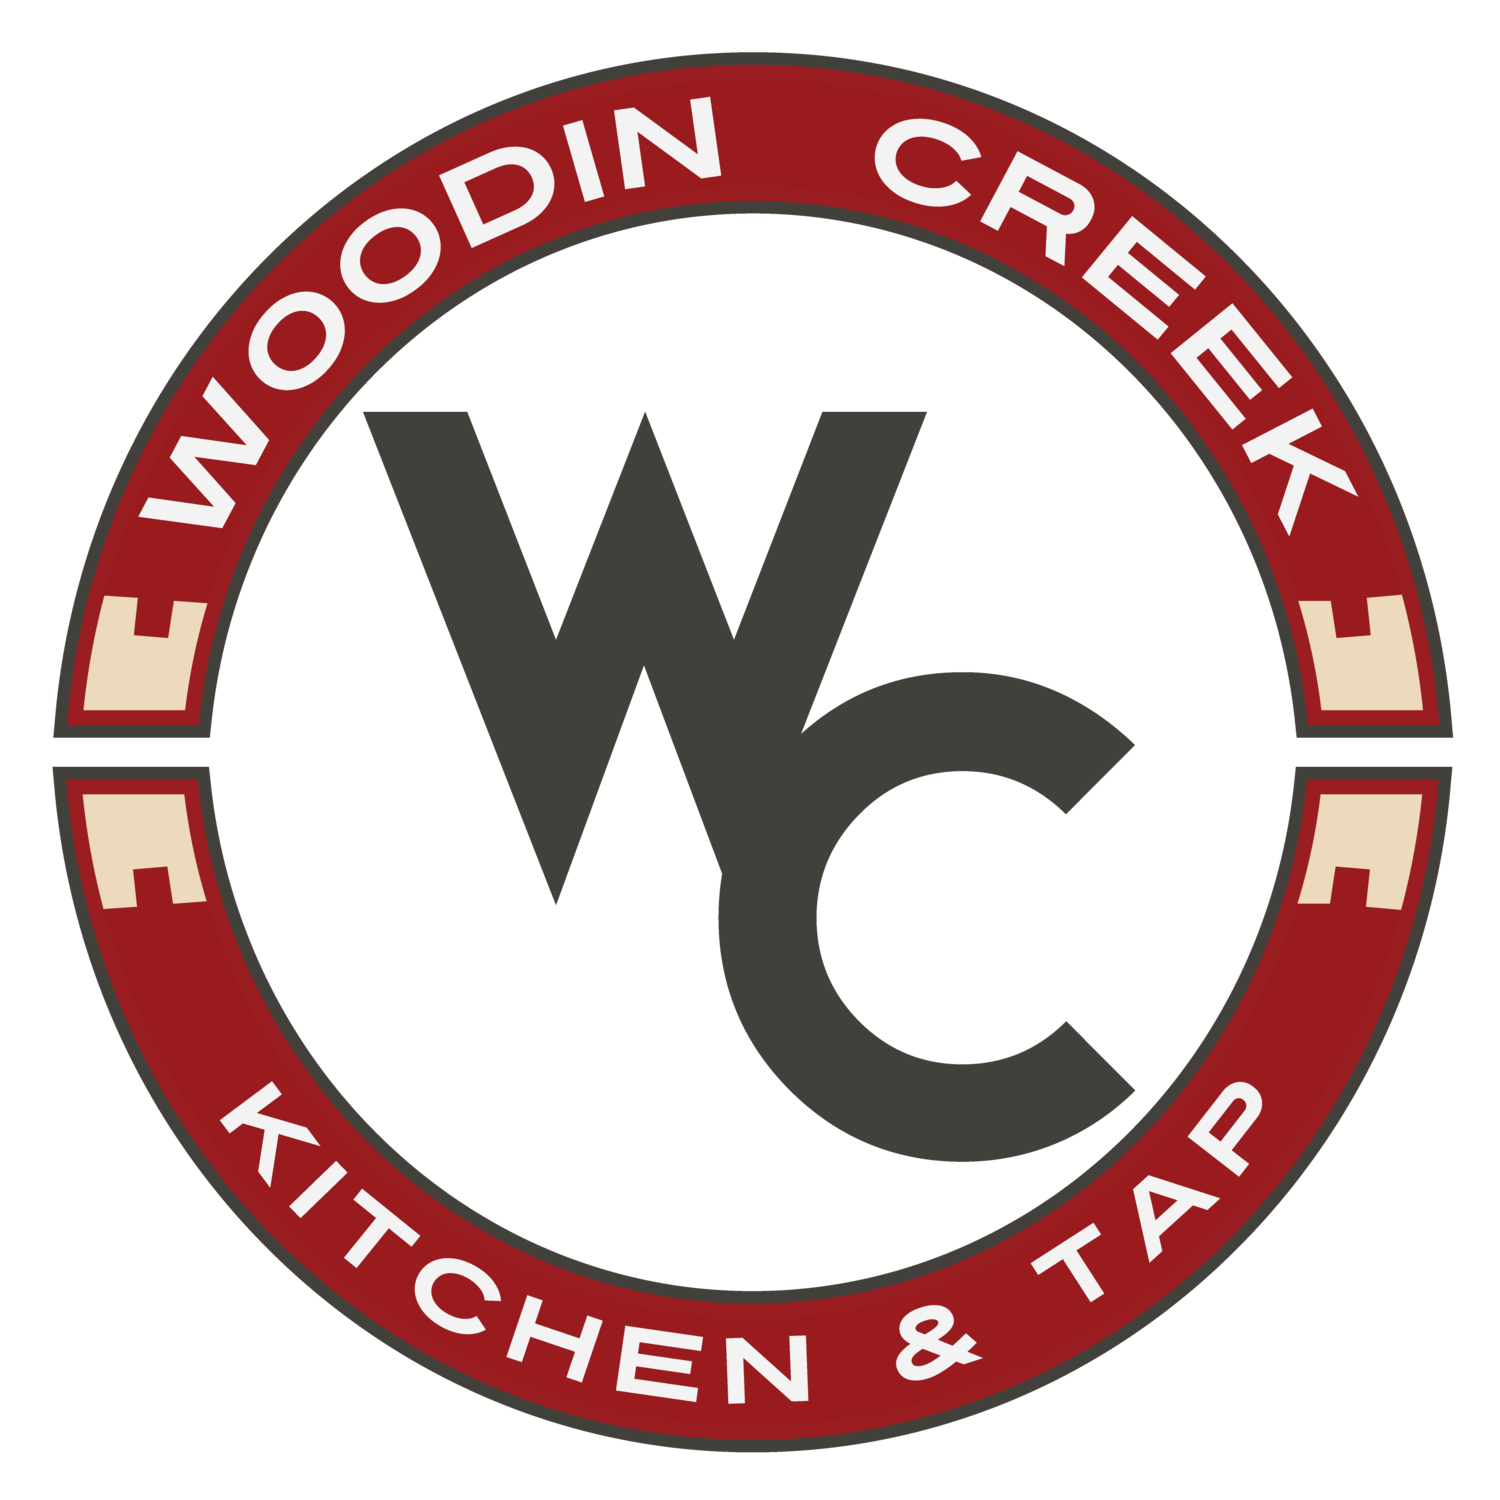 Woodin Creek Kitchen & Tap